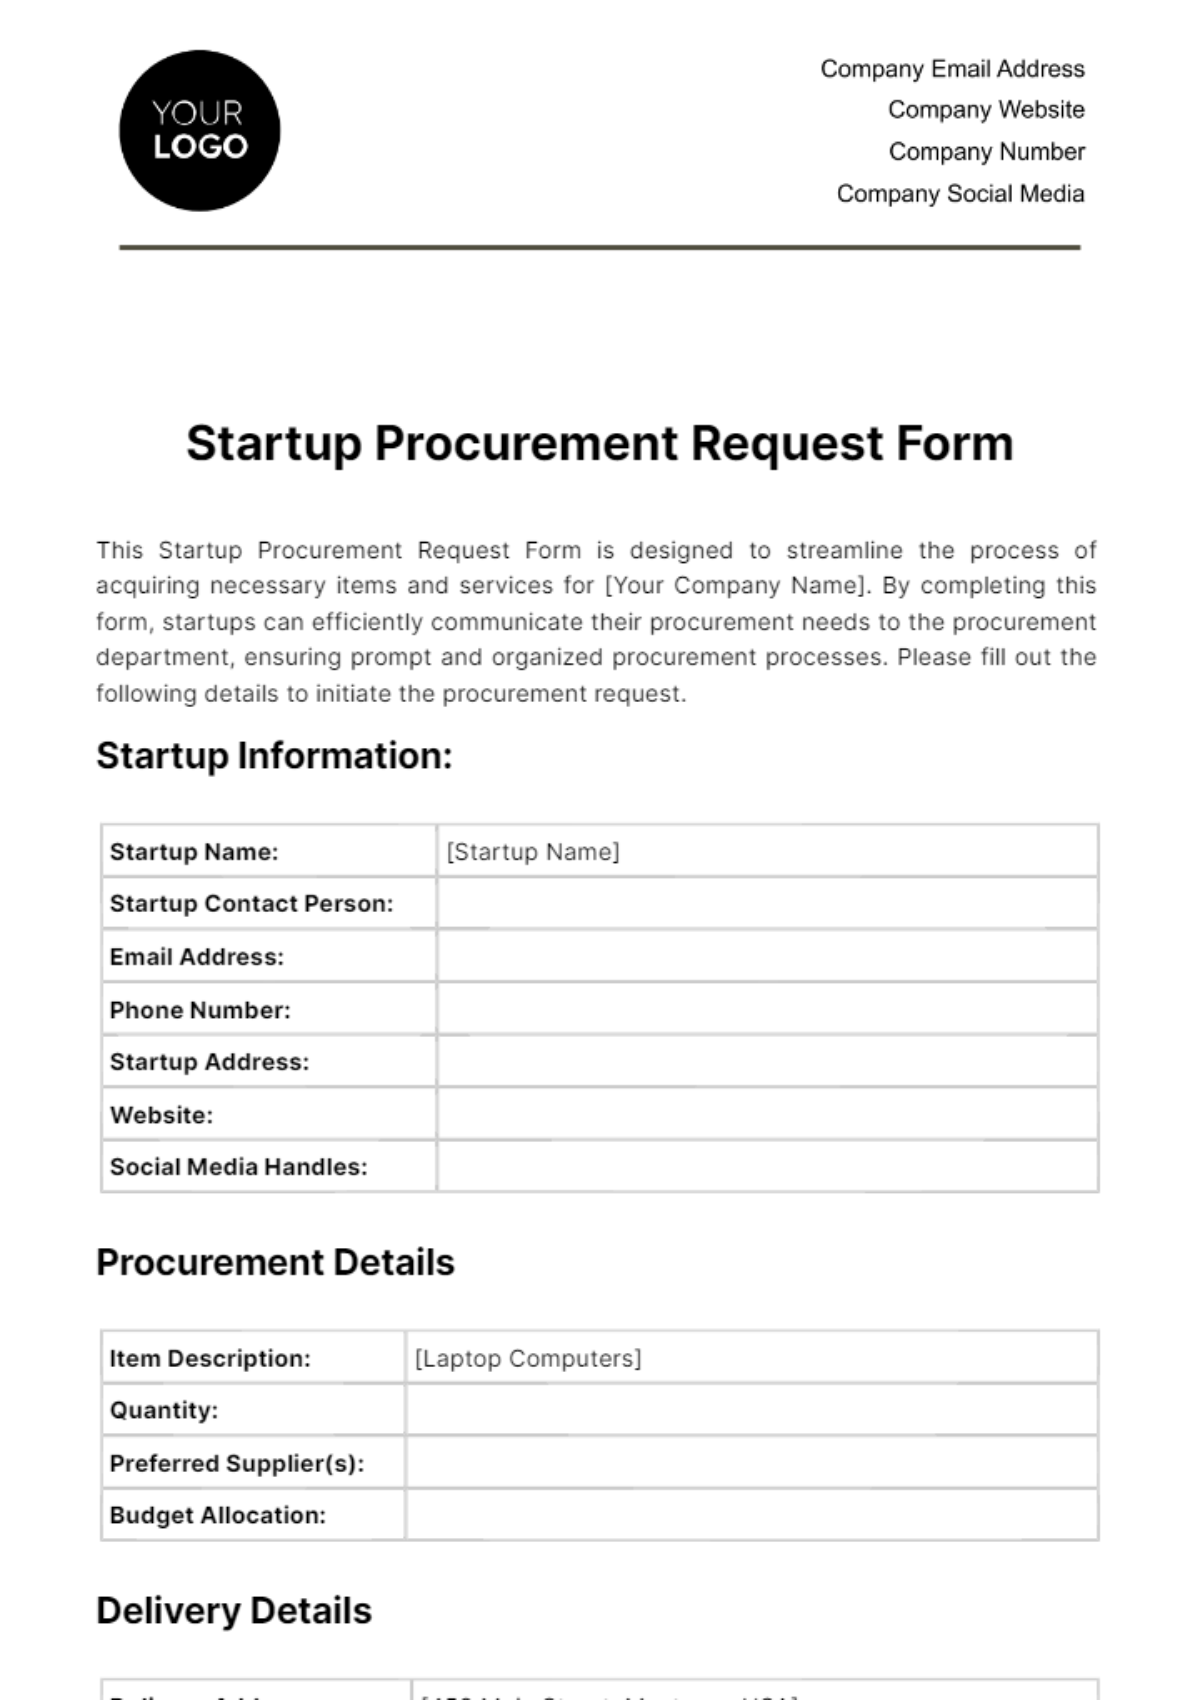 Startup Procurement Request Form Template